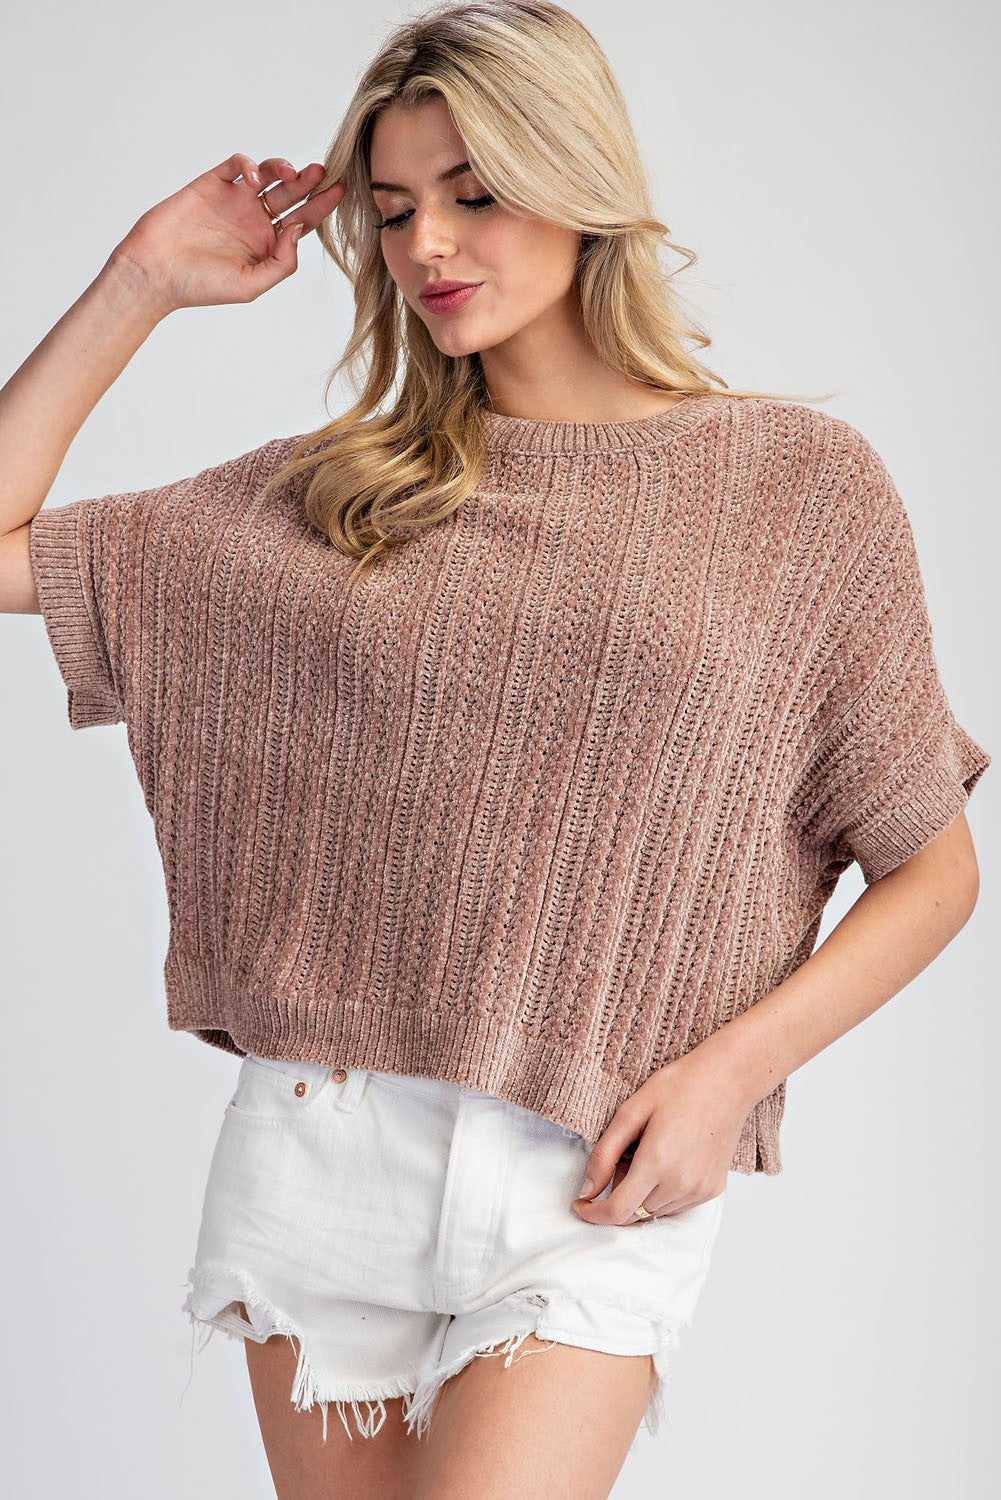 The Matilda Short Sleeve Sweater